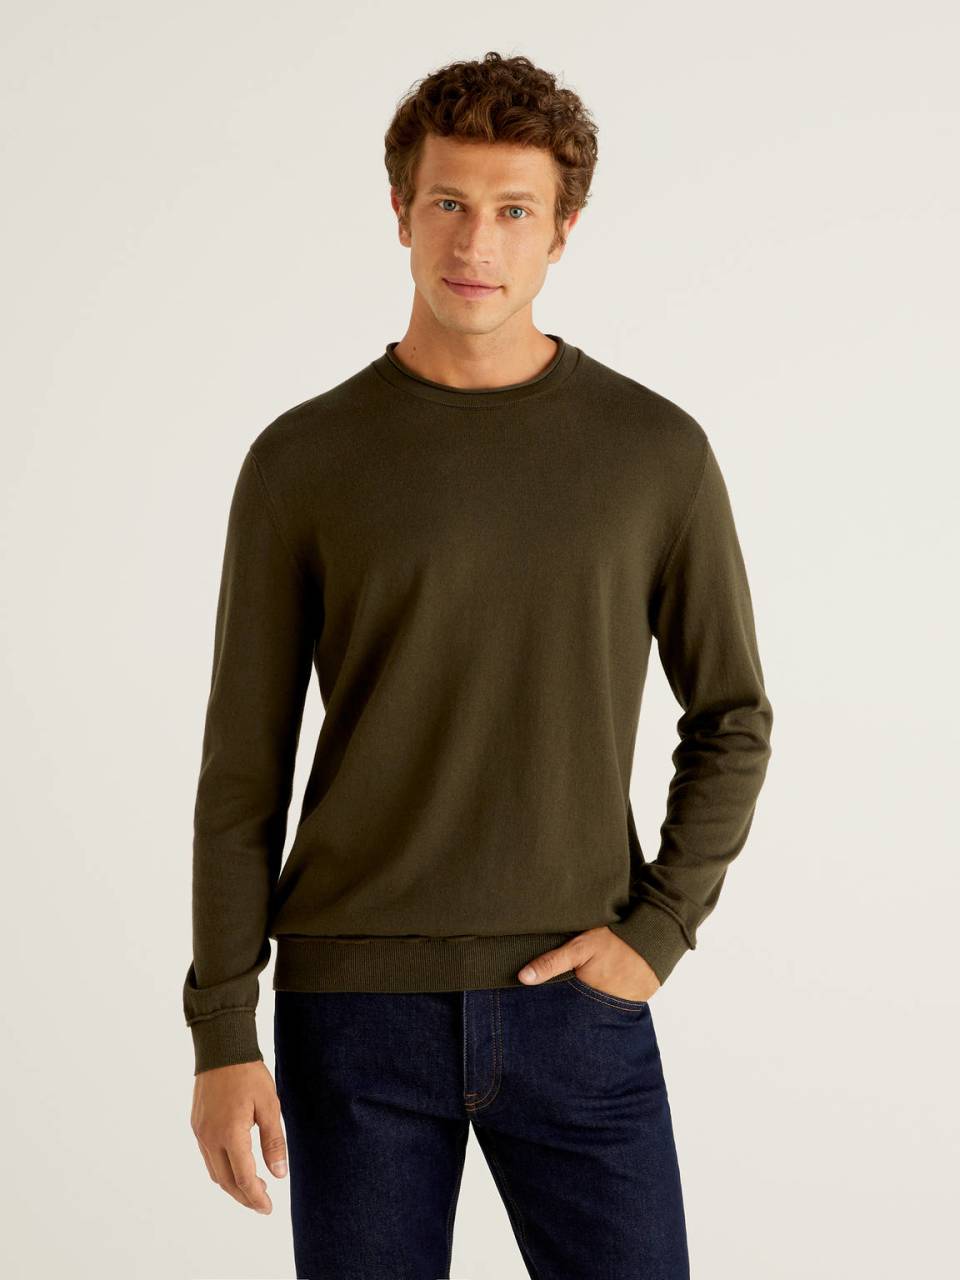 Benetton Sweater in warm 100% cotton. 1